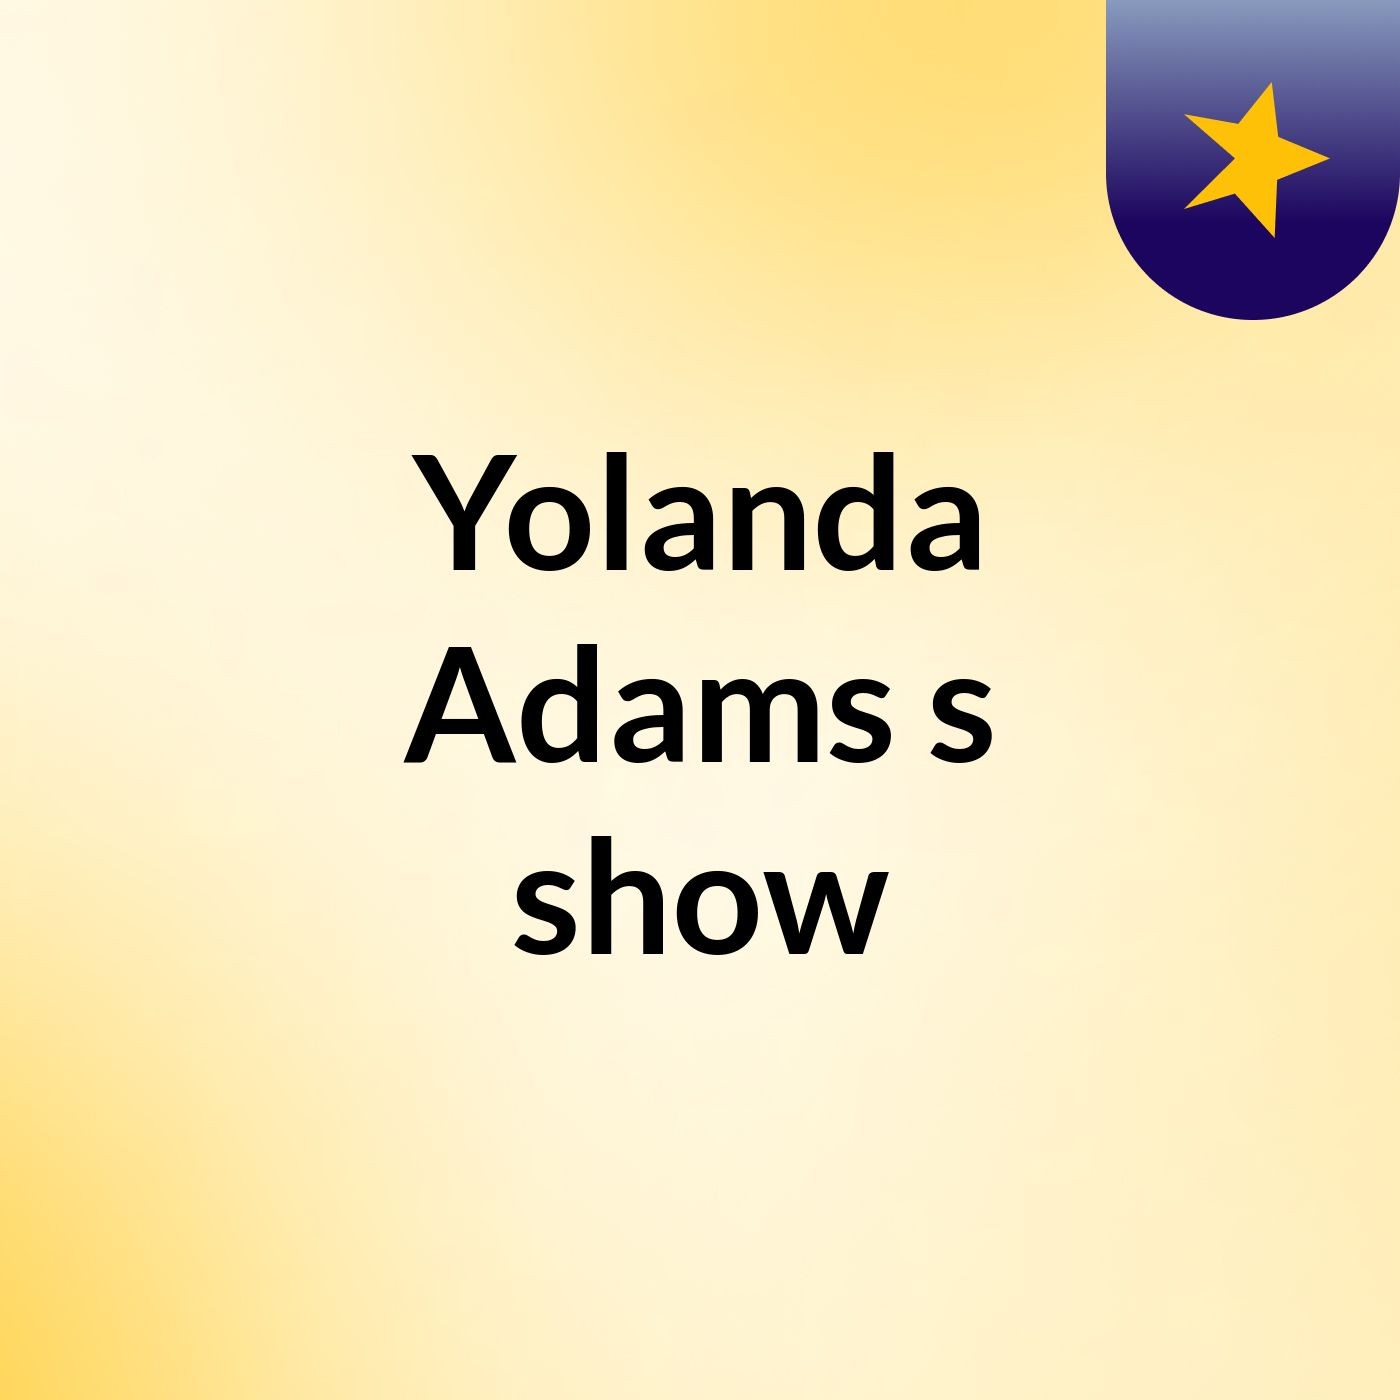 Yolanda Adams's show